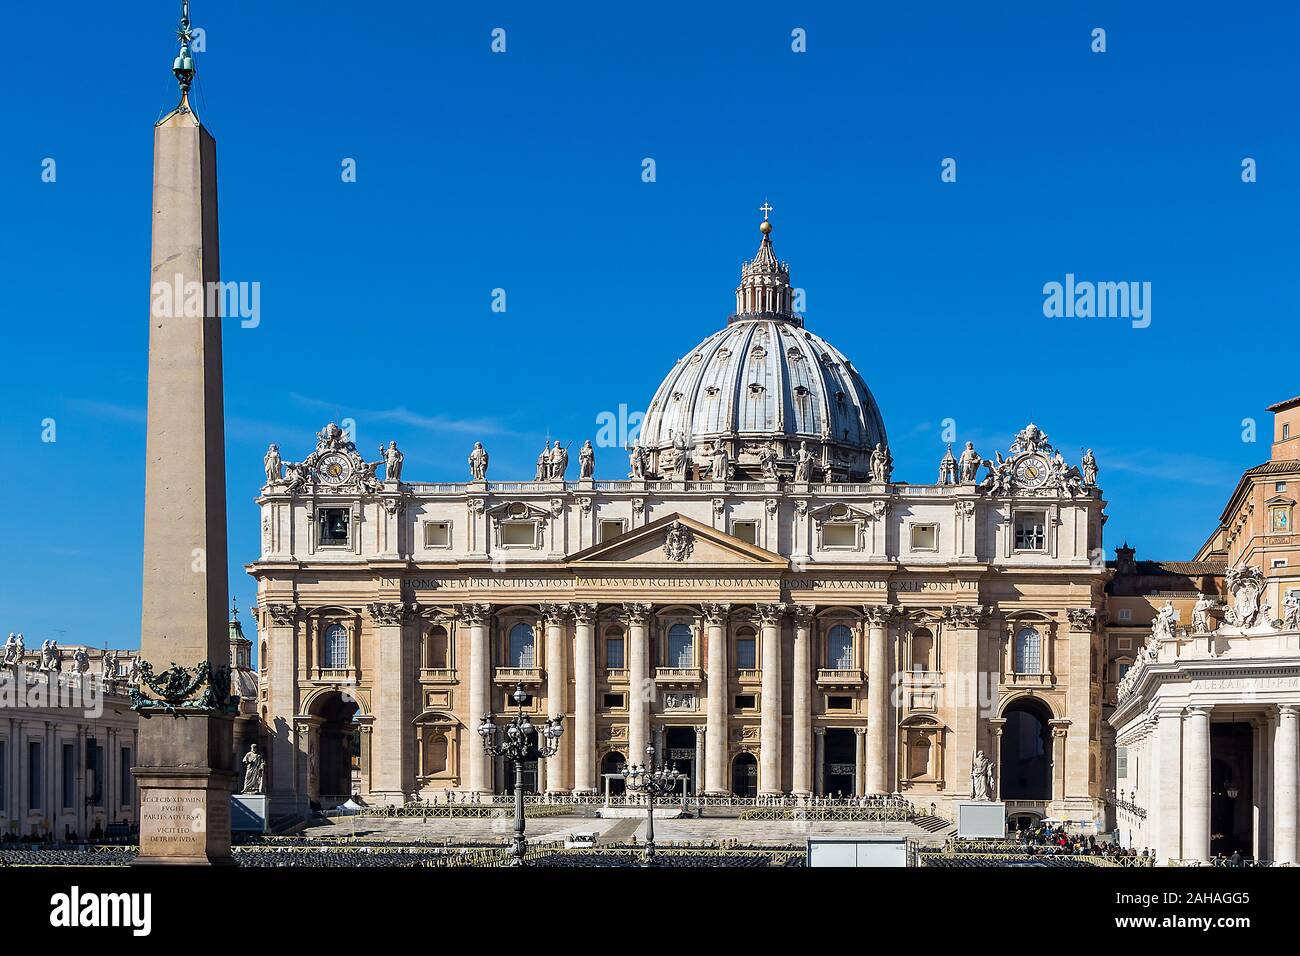 Blick auf den Petersdom im Vatikan, Rom, Italien Foto Stock